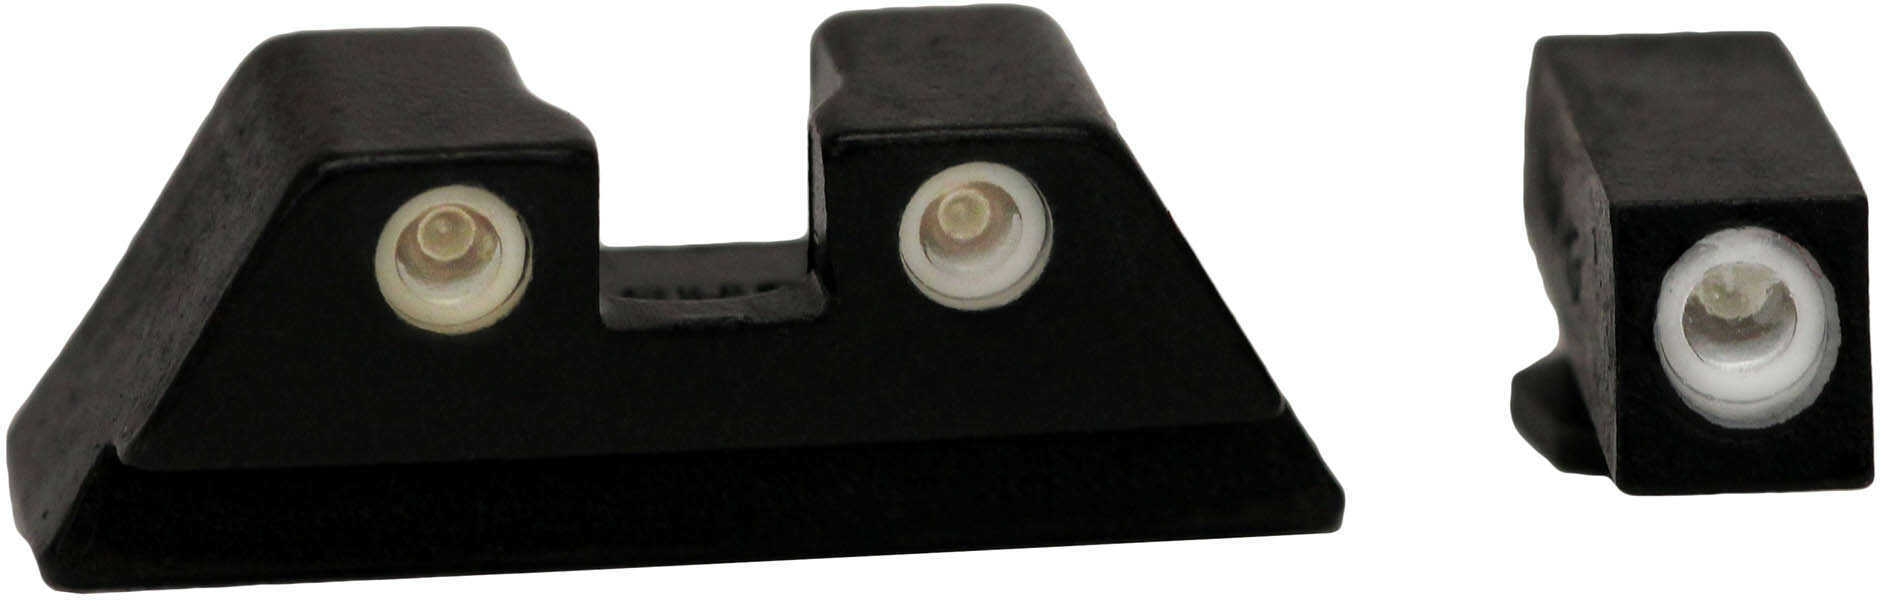 Meprolight USA 102223201 Tru-Dot Day/Night Tritium Sights for Glock 10MM/45ACP Fixed Green Yellow Black Frame